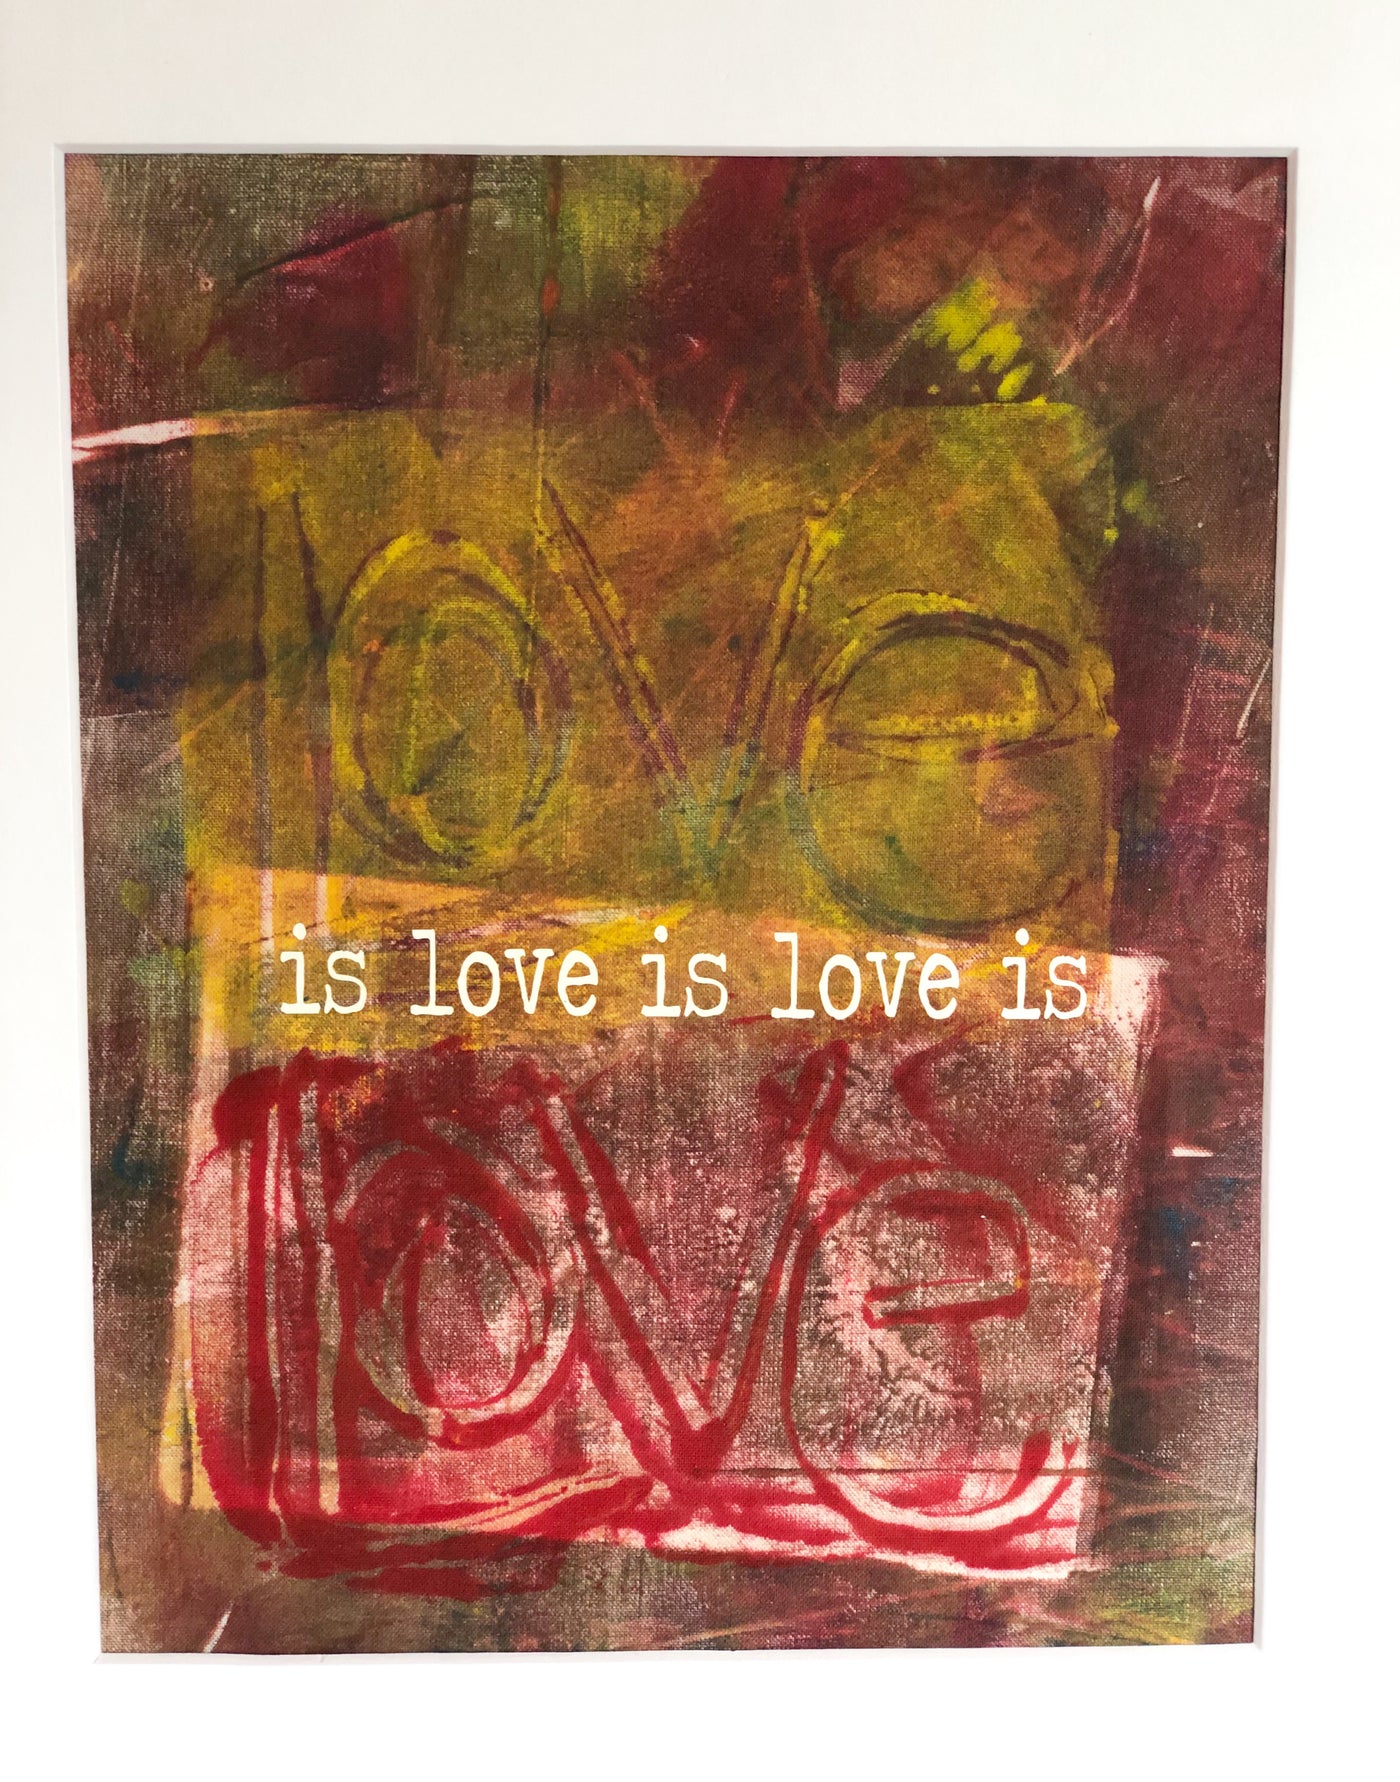 love is love is love - art print